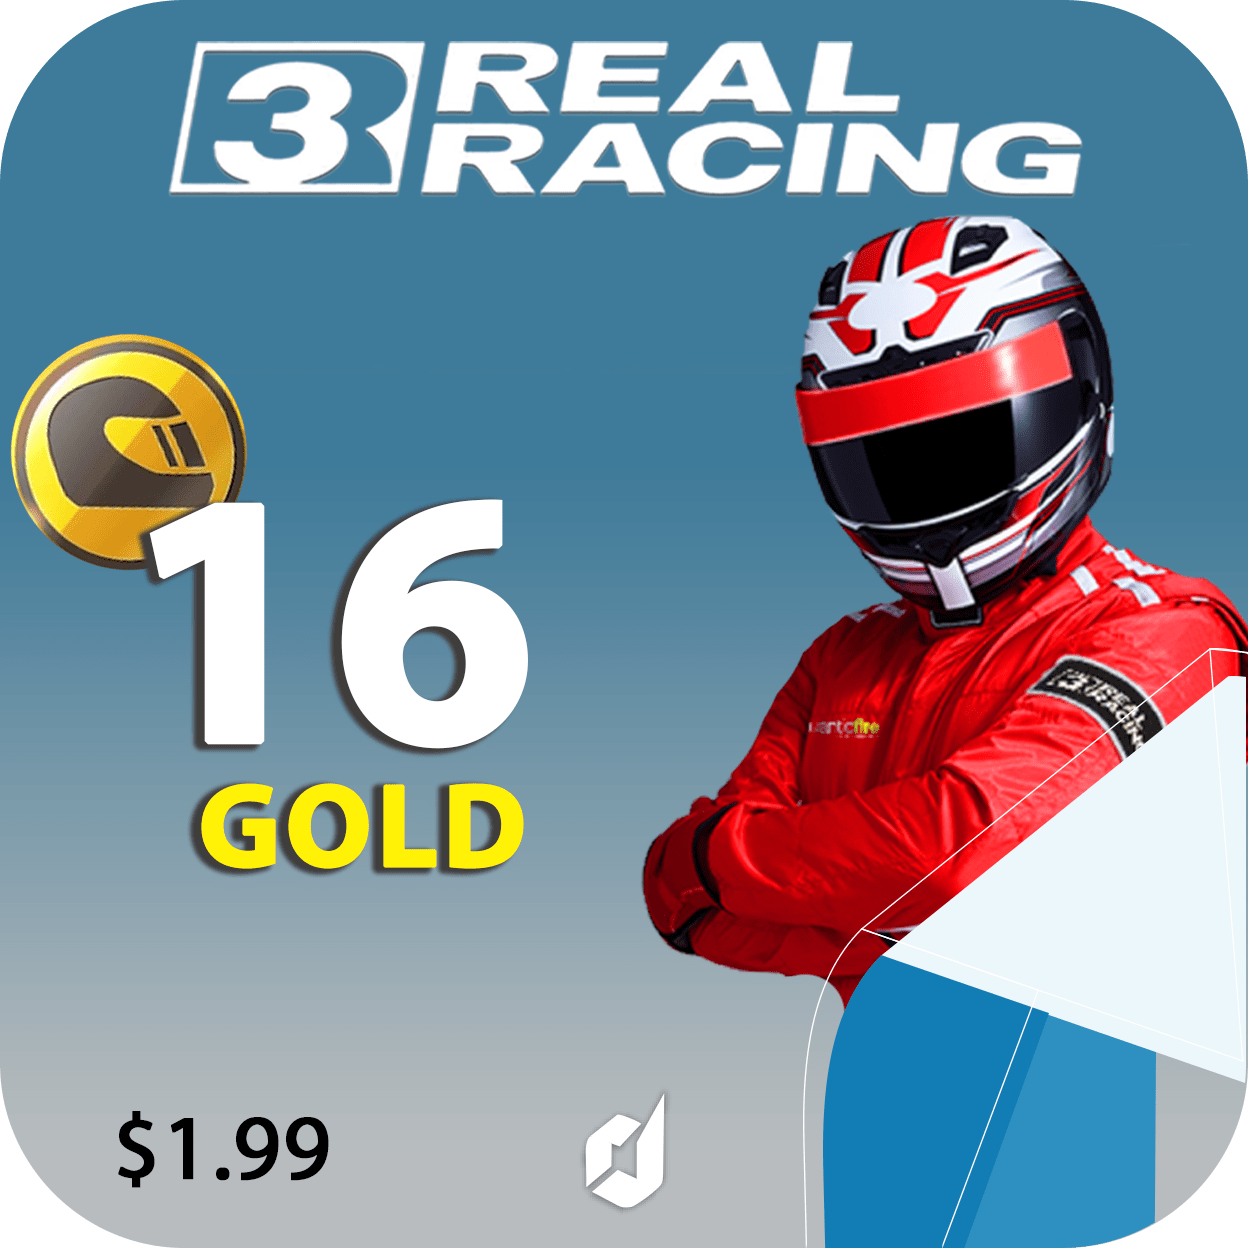 گلد بازی Real Racing 3